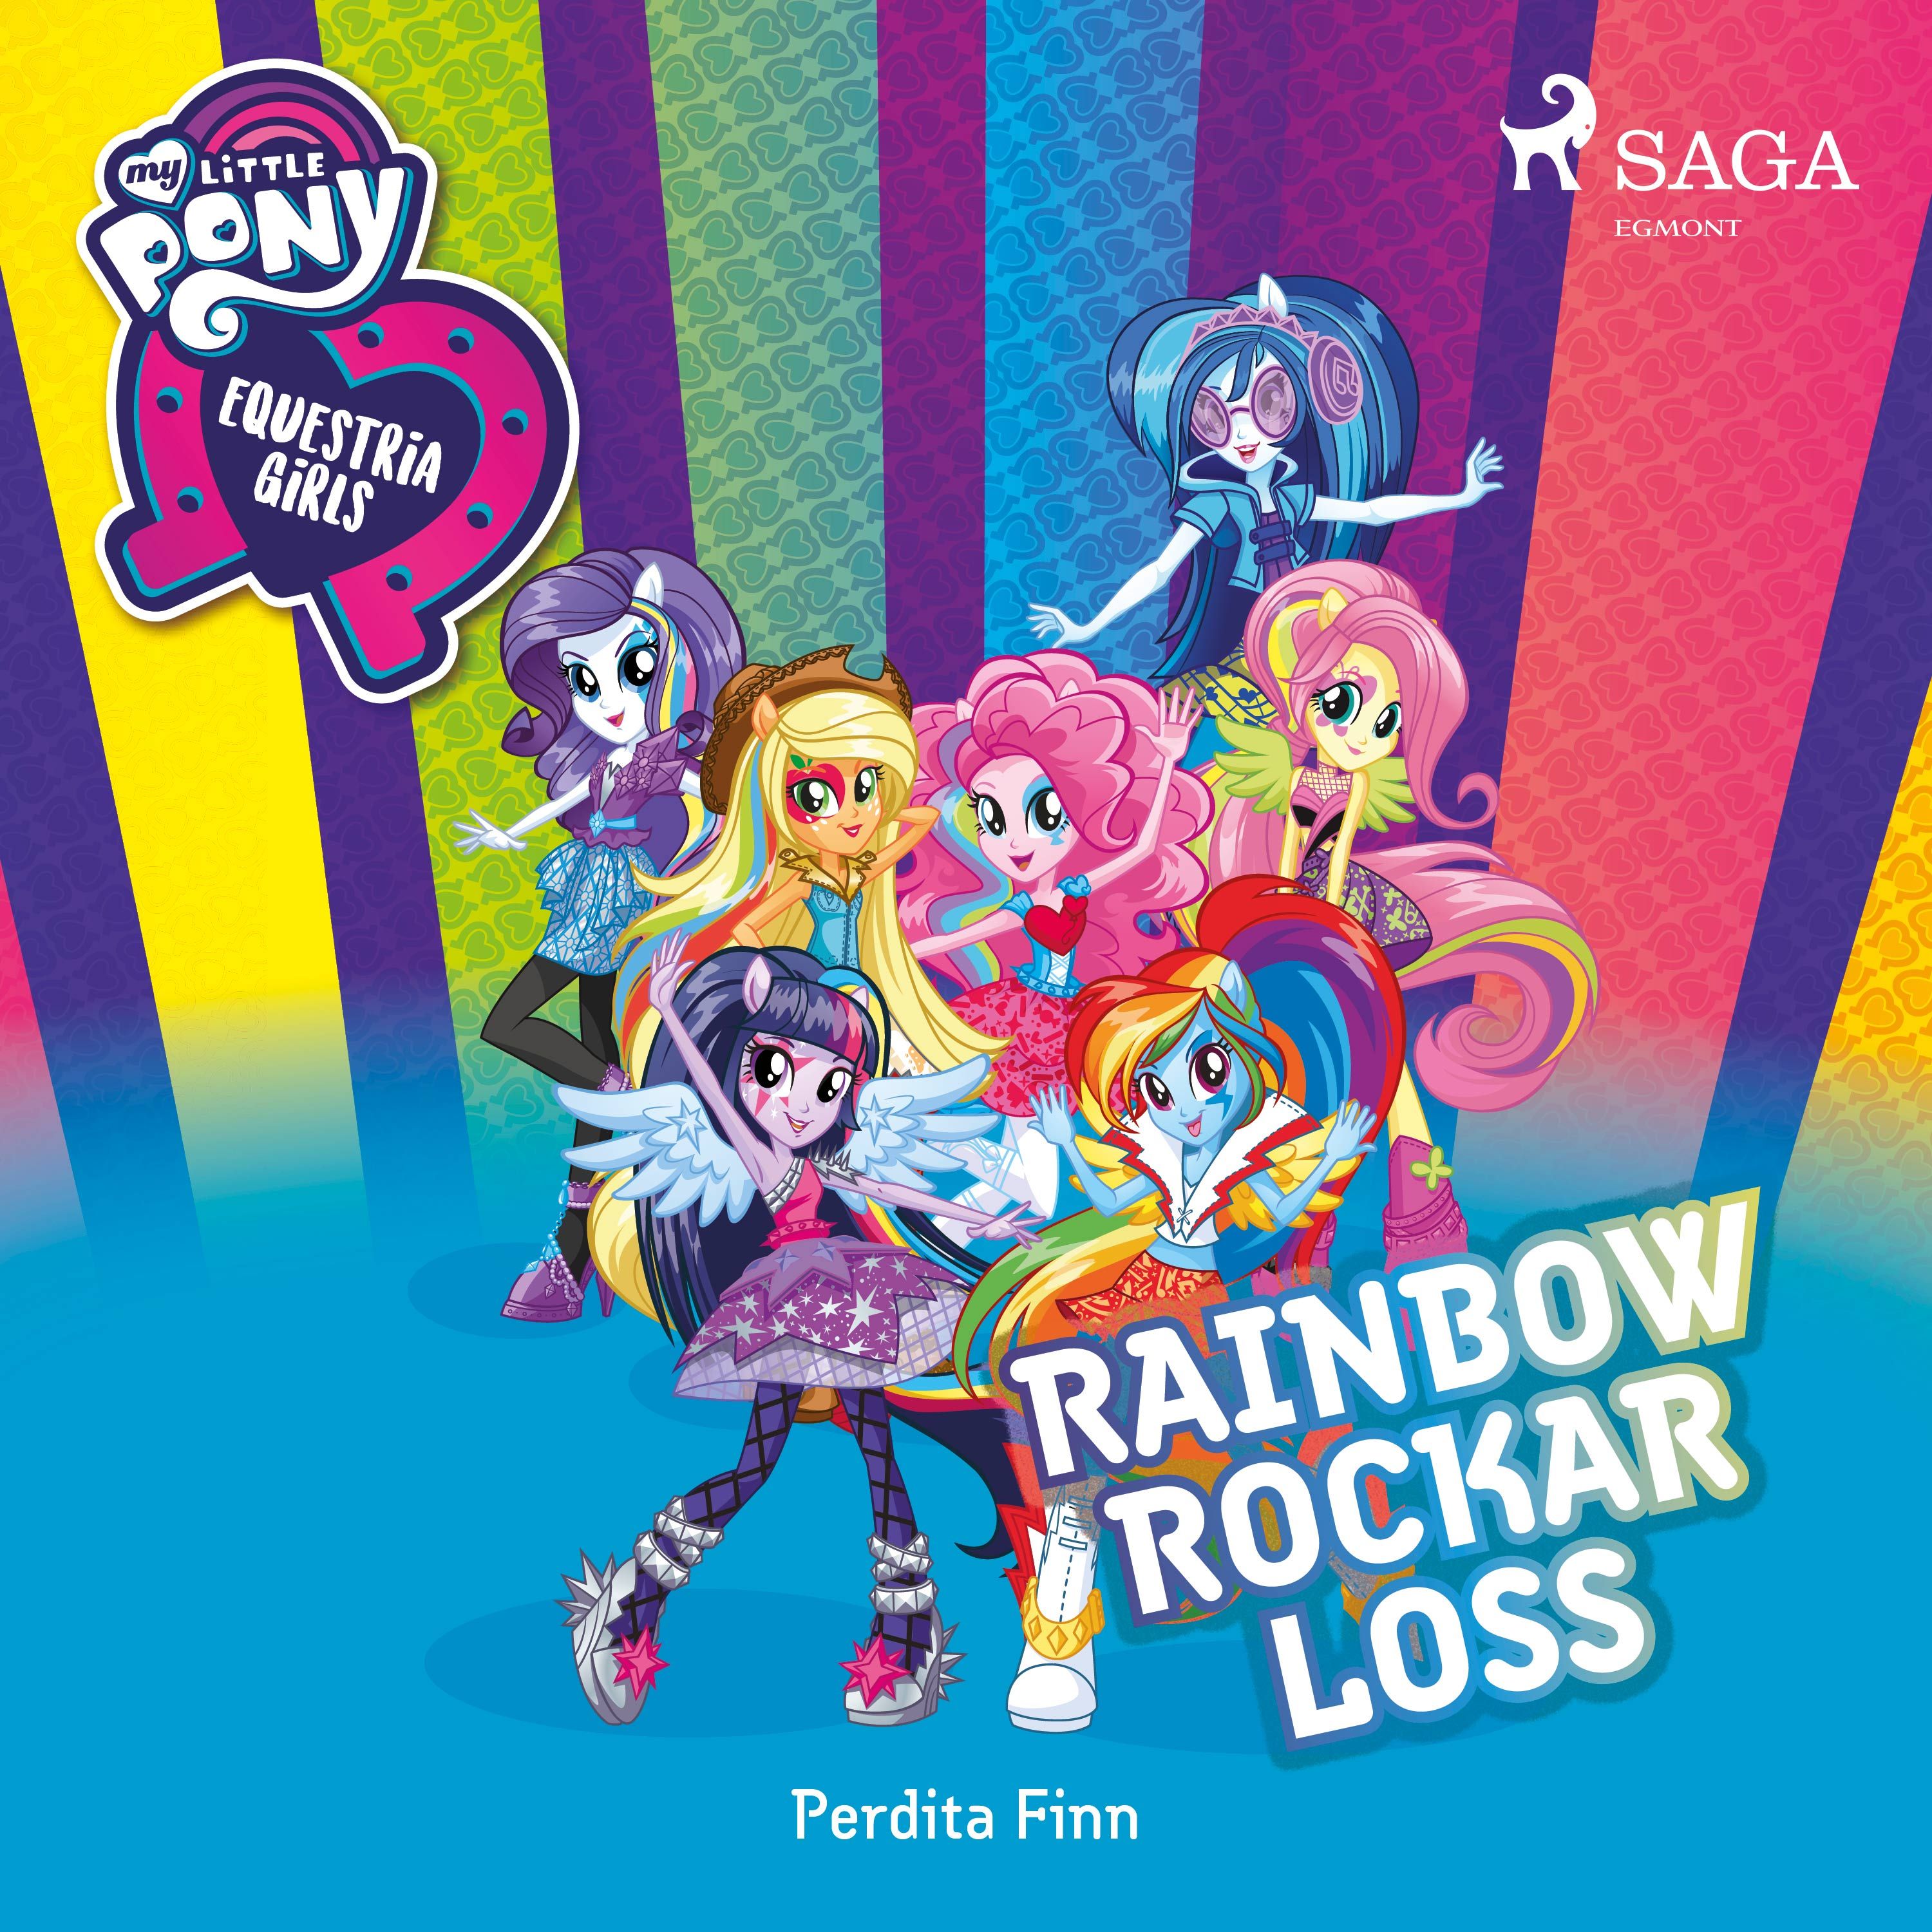 Equestria Girls - Rainbow rockar loss, audiobook by Perdita Finn